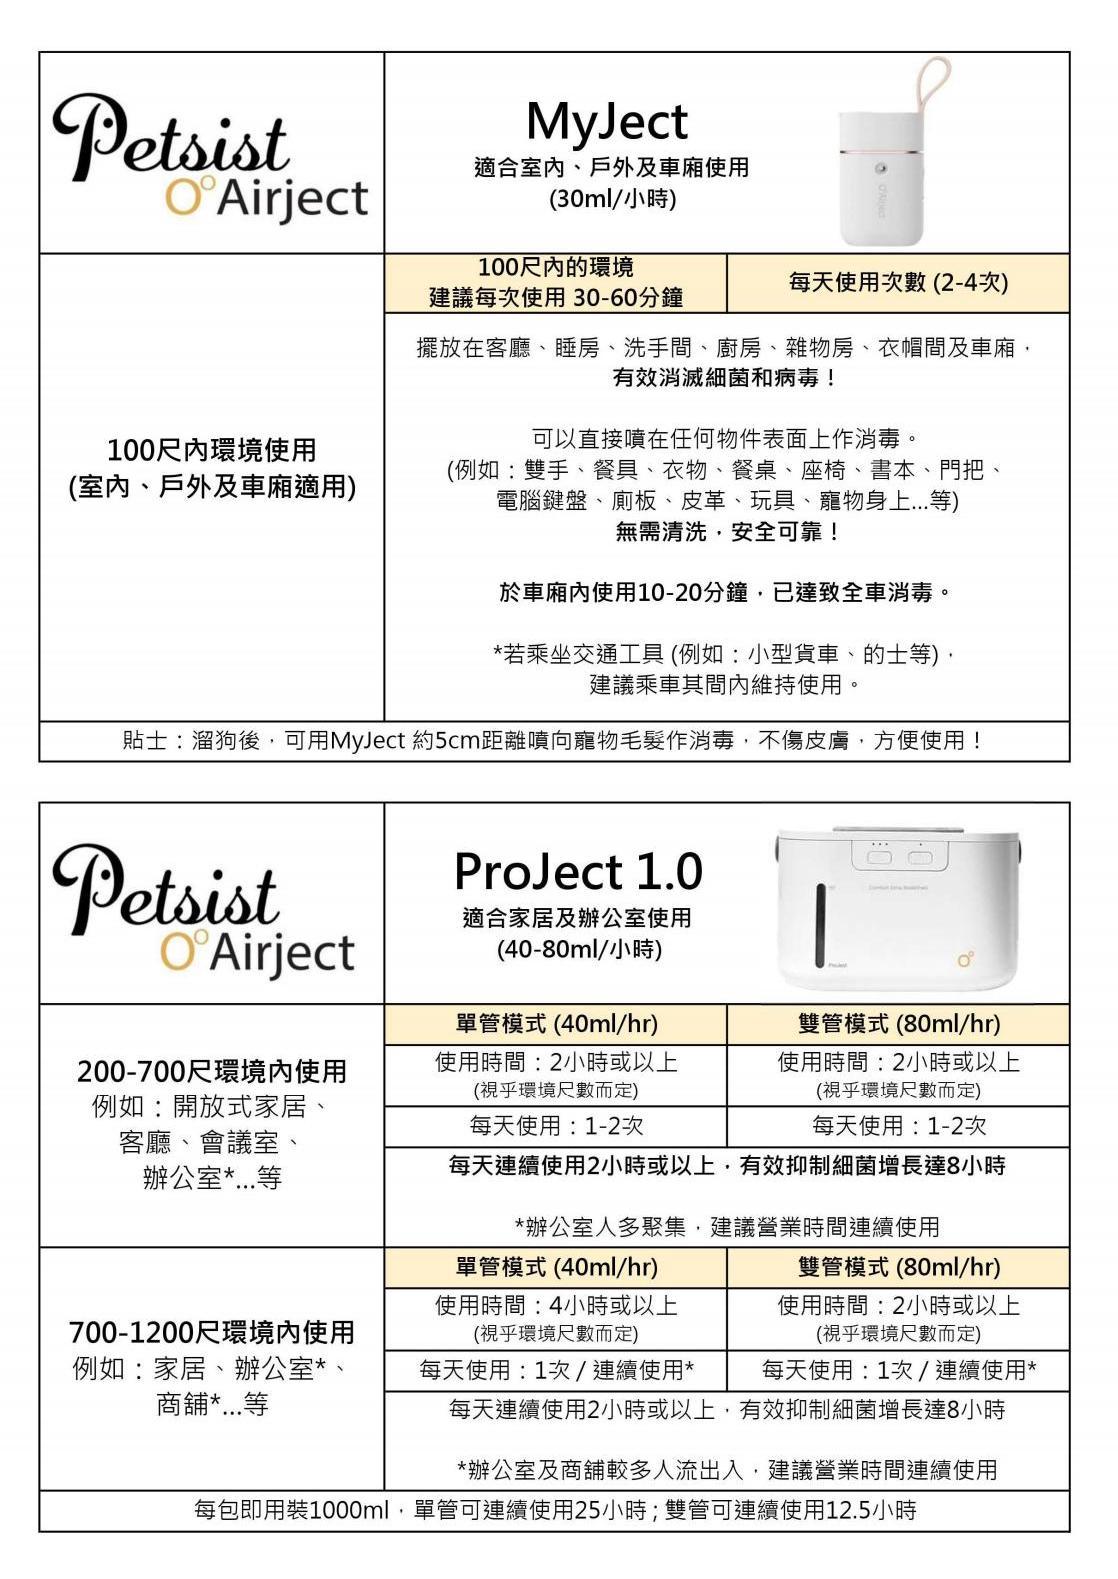 Petsist O Airject Catalog 資料介紹_2022 APR_11.jpg